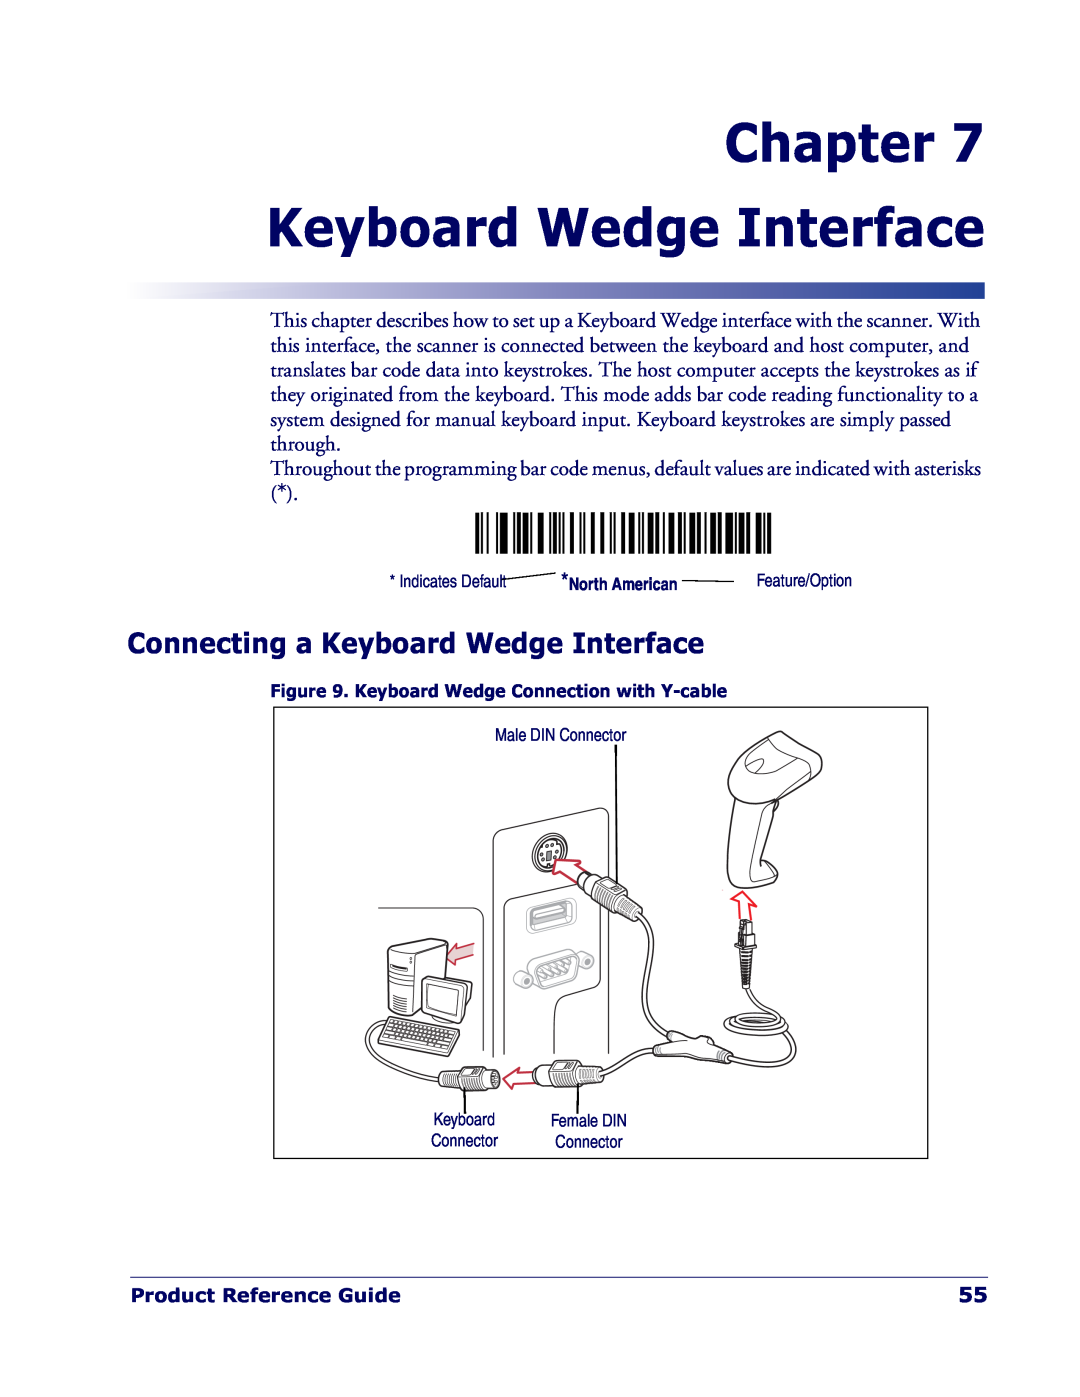 Datalogic Scanning QD 2300 manual Chapter Keyboard Wedge Interface, Connecting a Keyboard Wedge Interface 